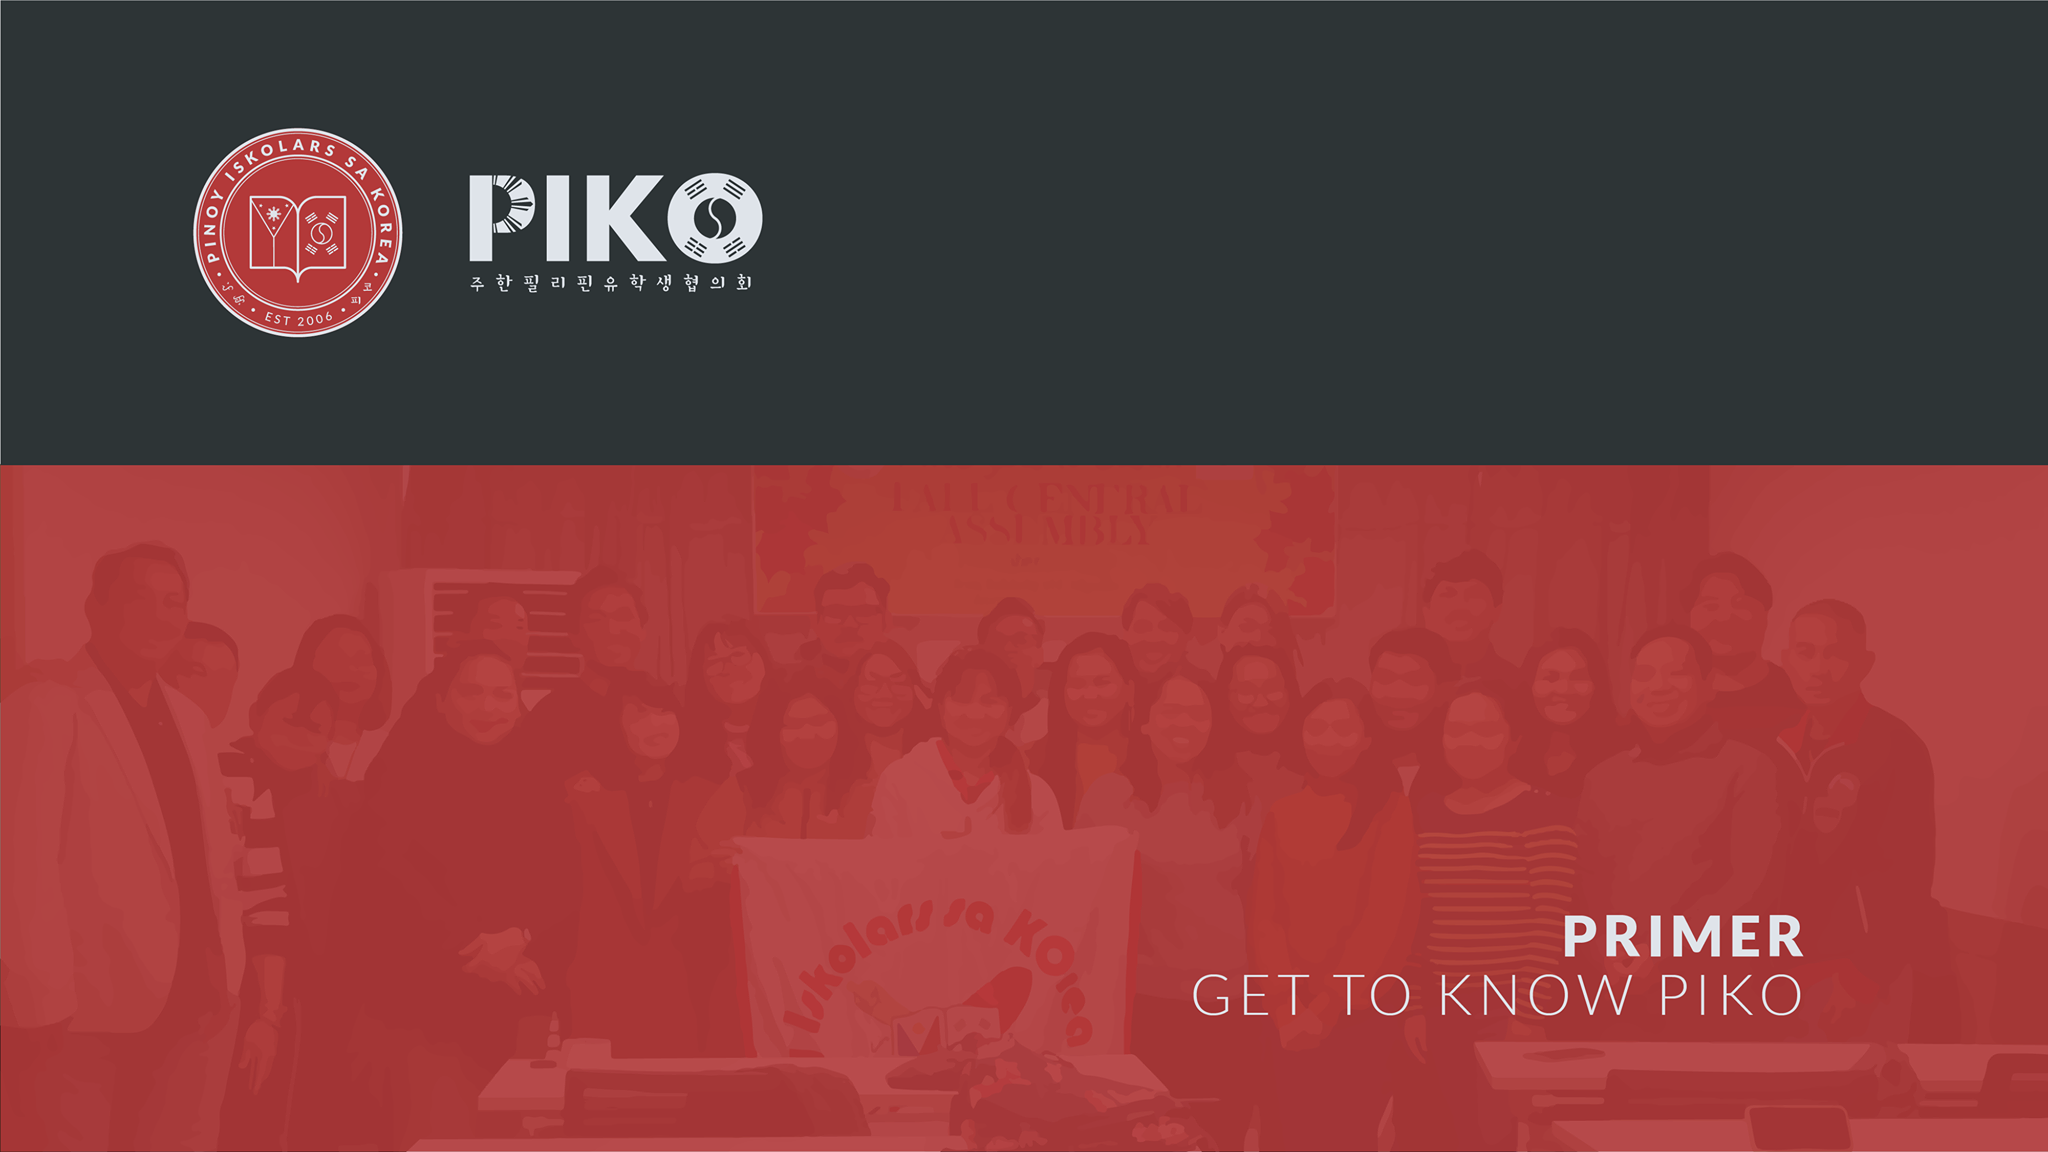 Launching the PIKO Primer